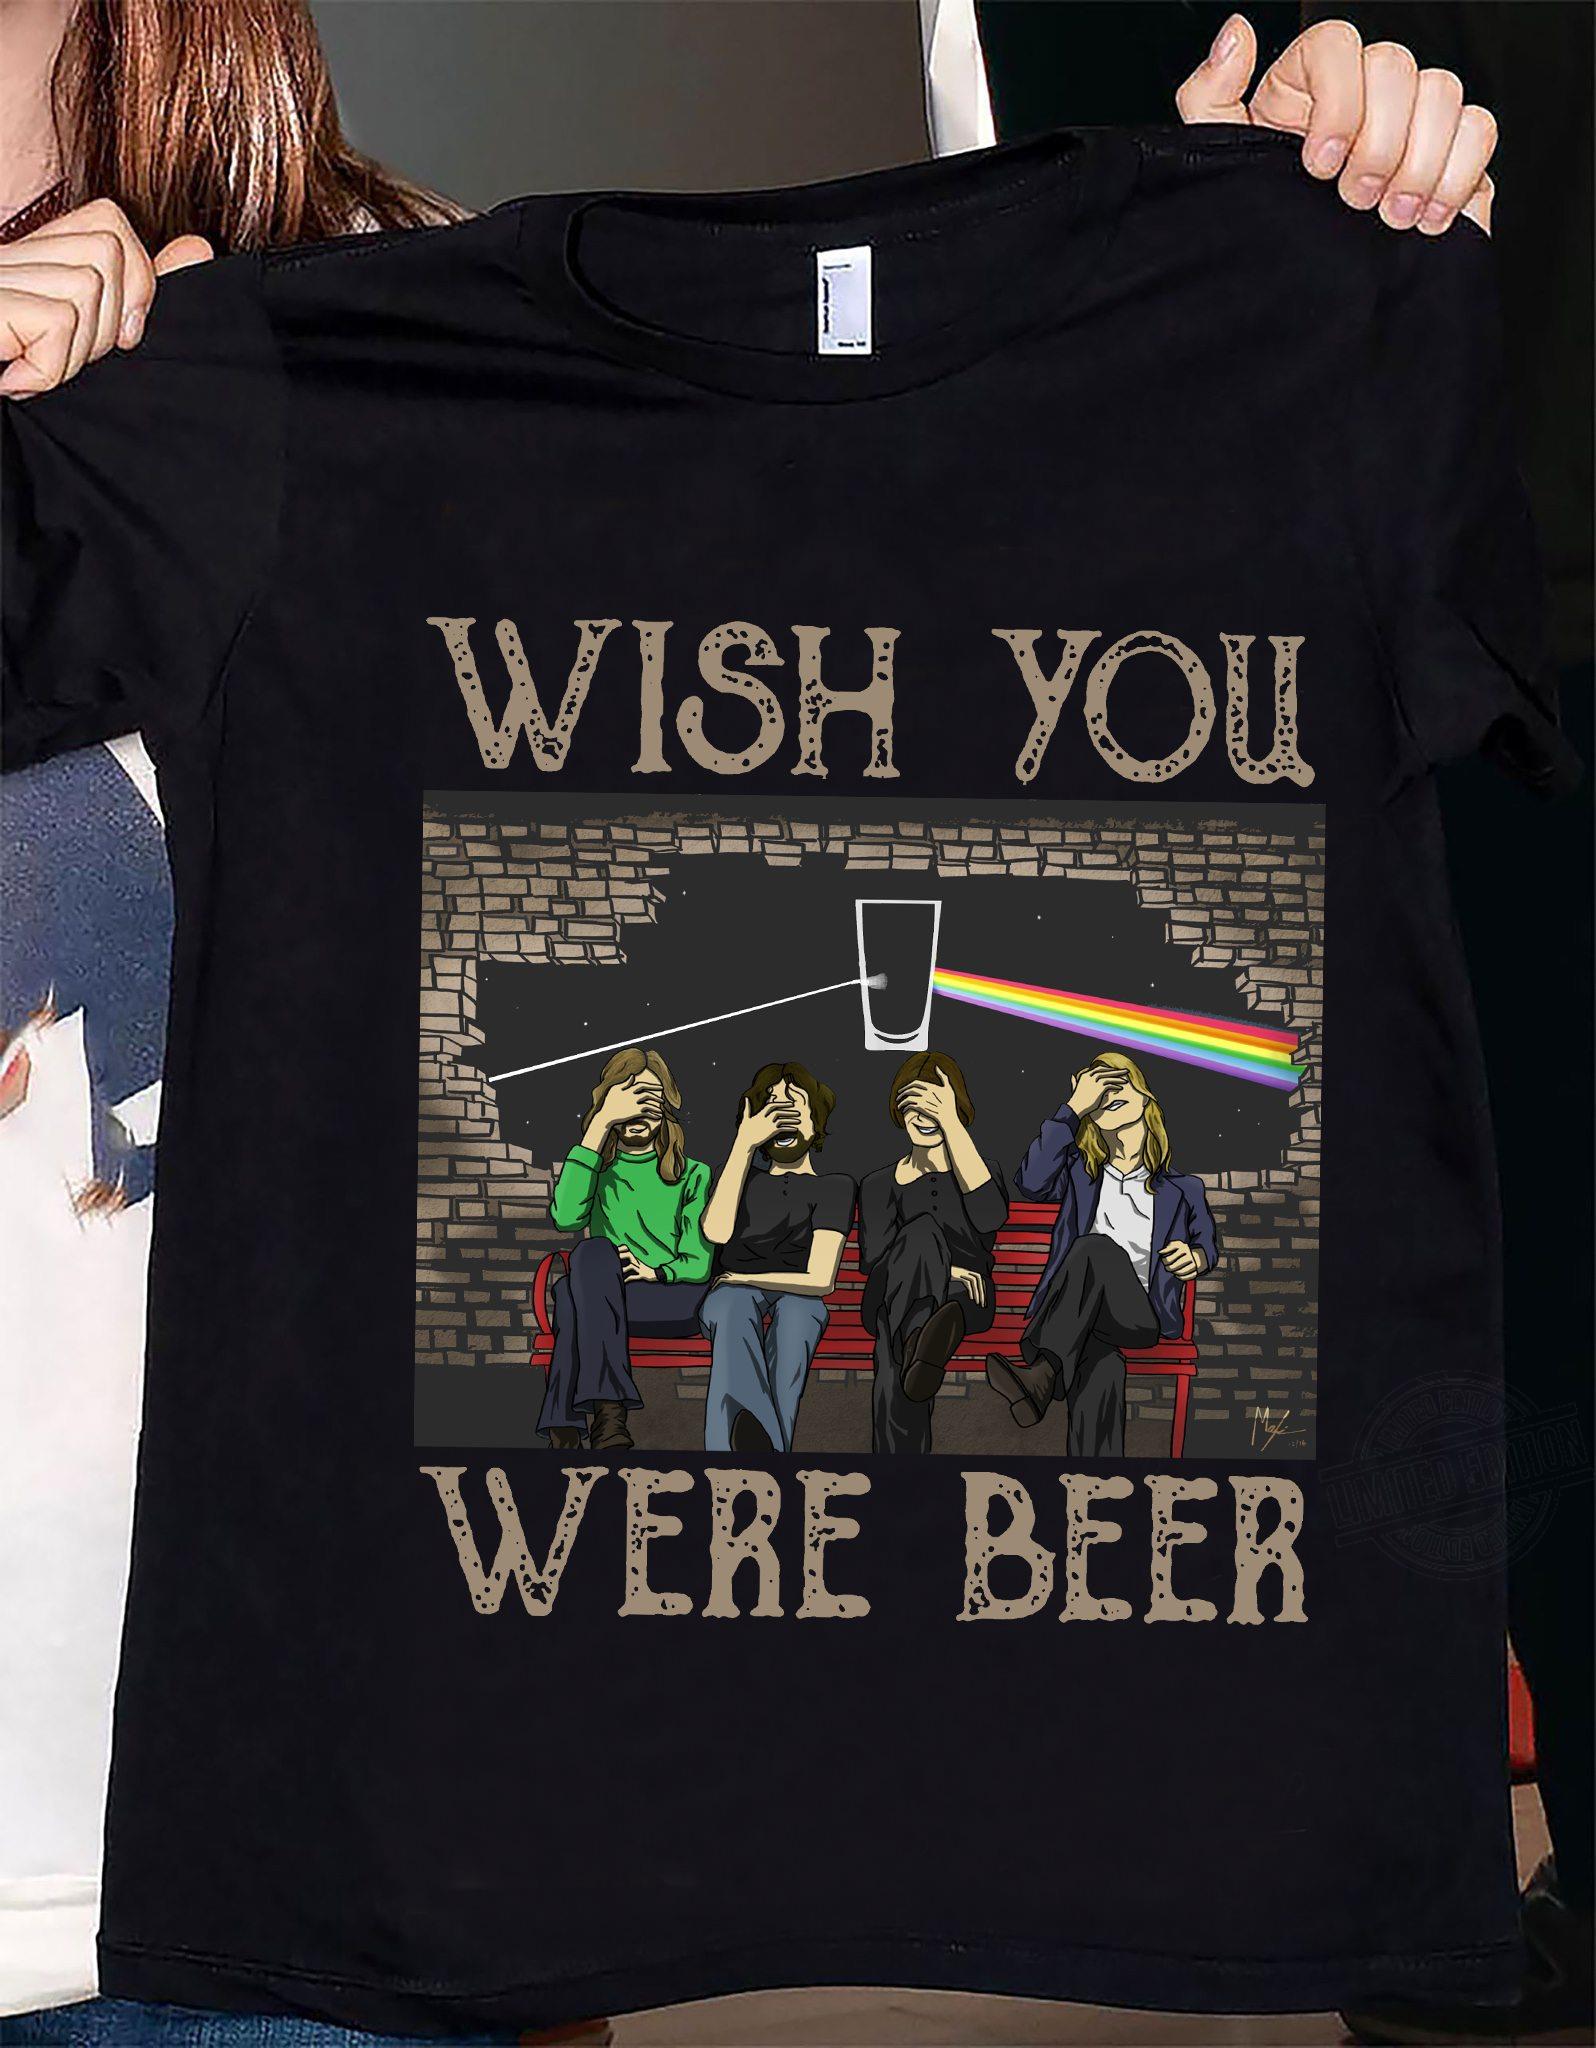 Pink Floyd Wish You Were Beer Shirt